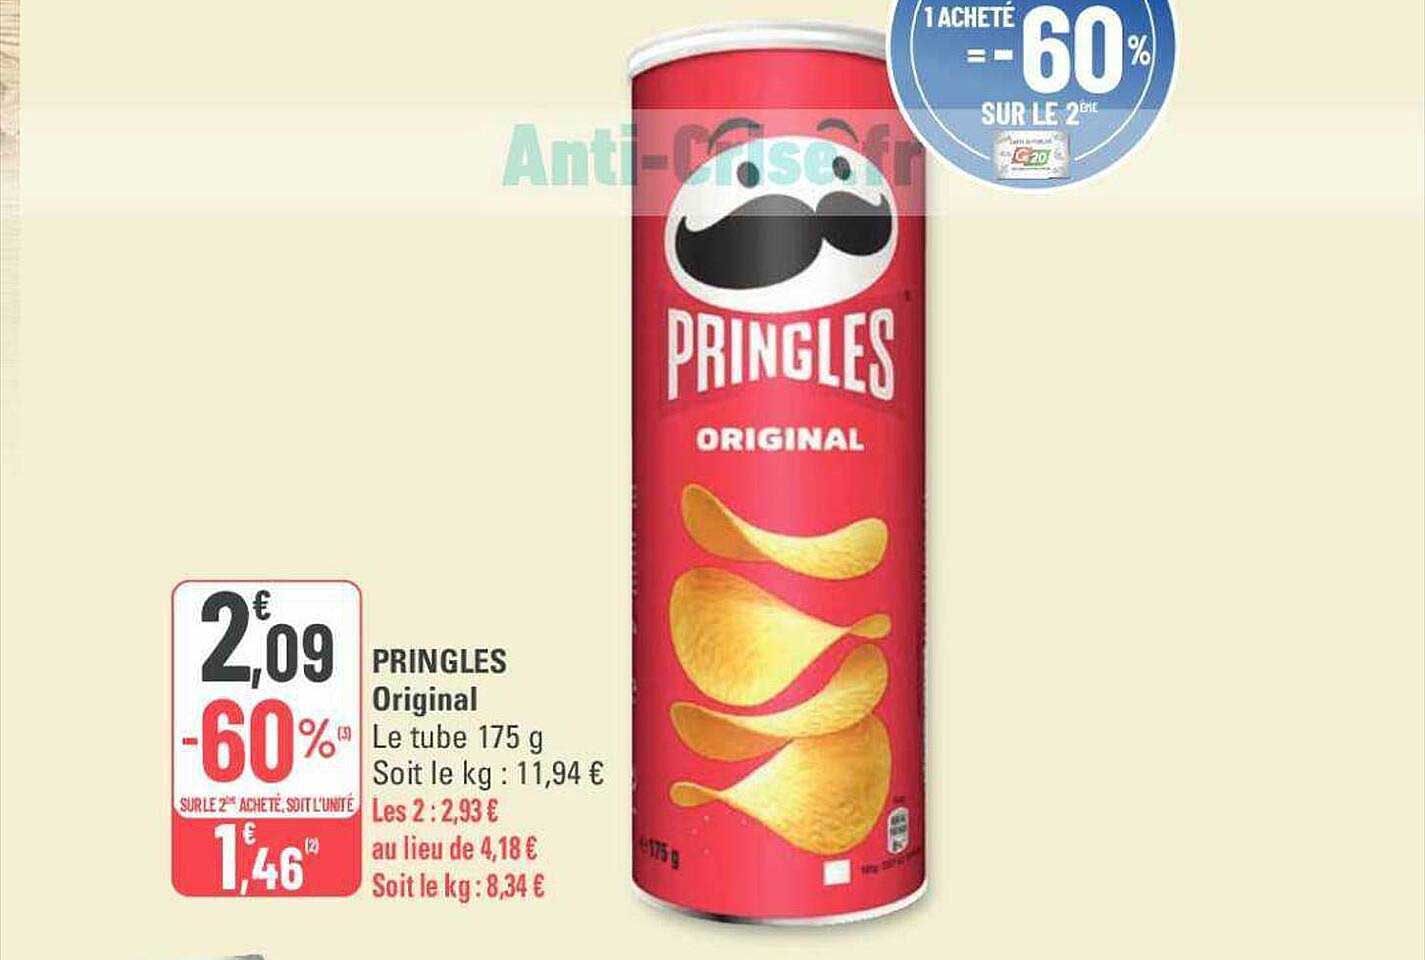 Promo Pringles Original chez G20